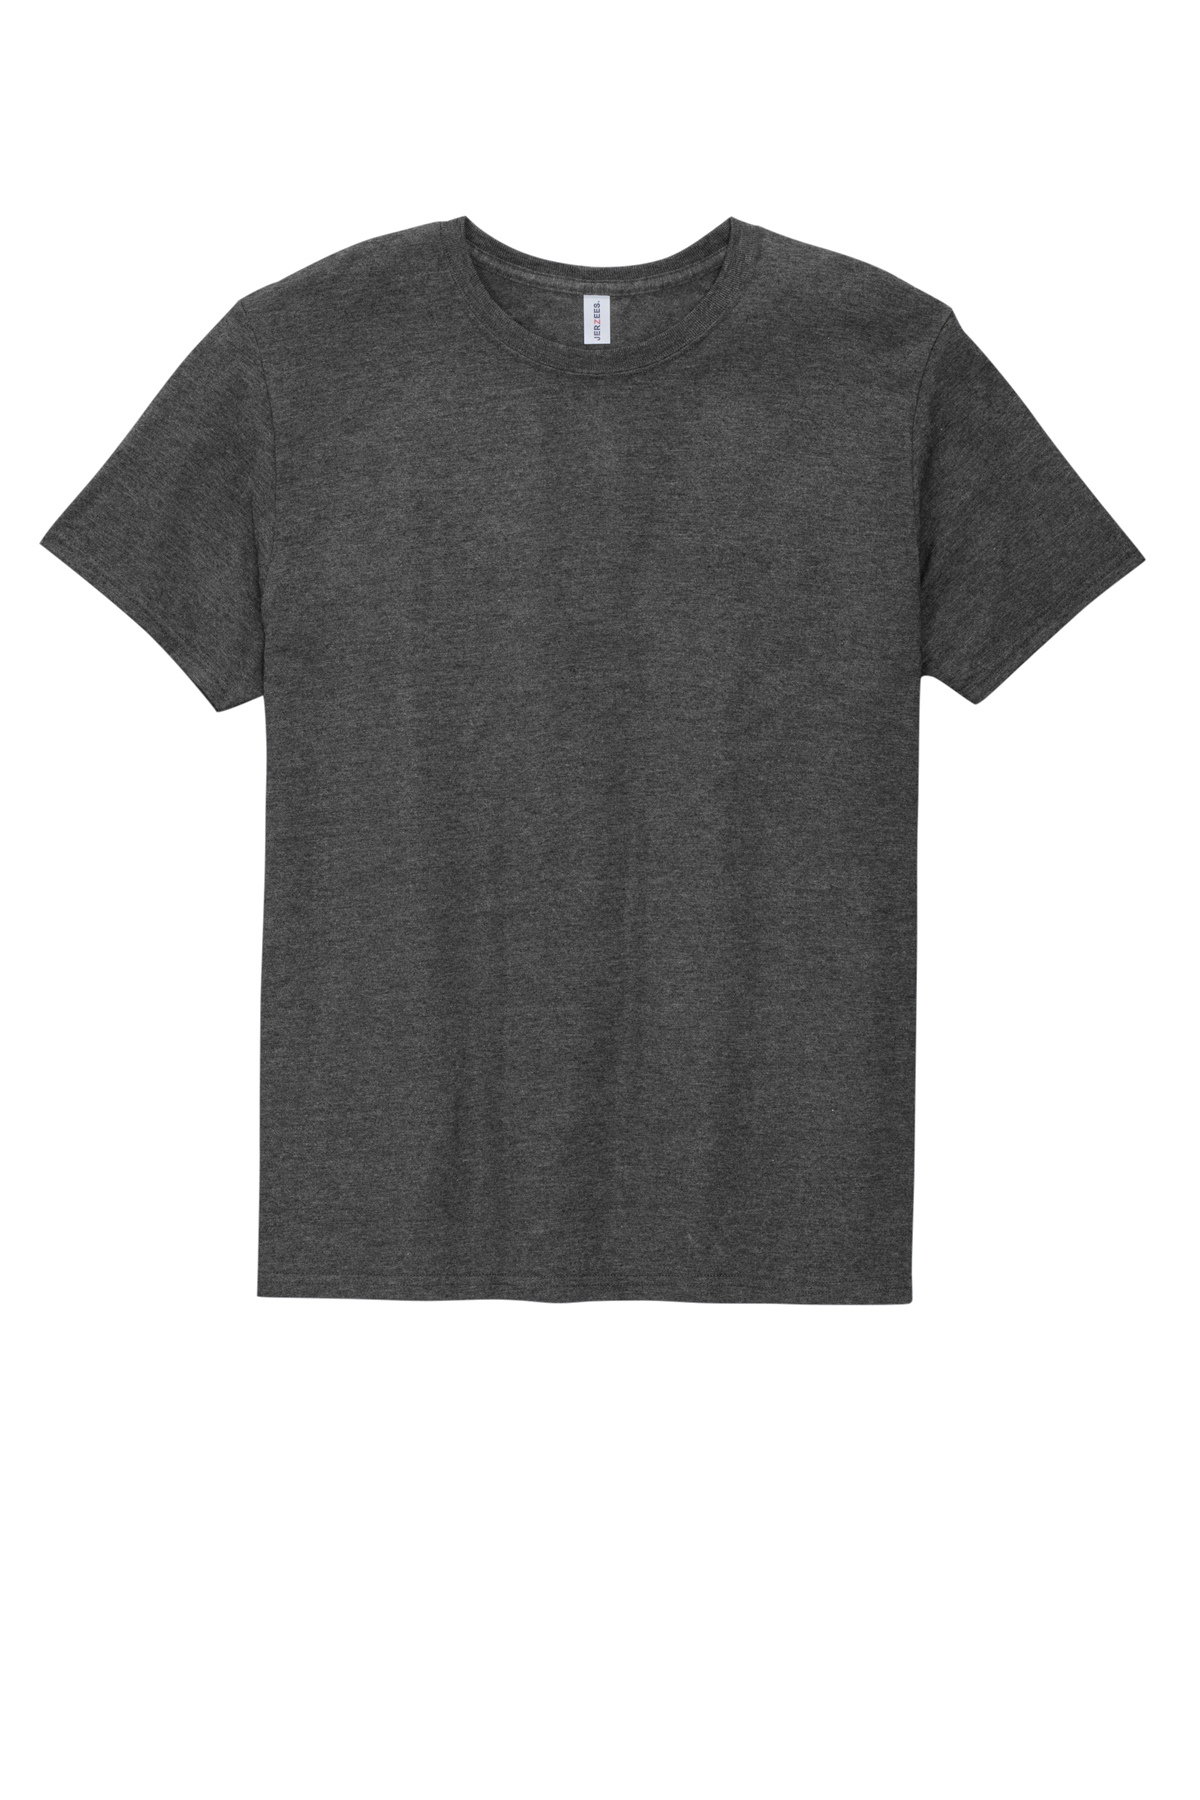 JERZEES Premium Blend Ring Spun T-Shirt | Product | SanMar